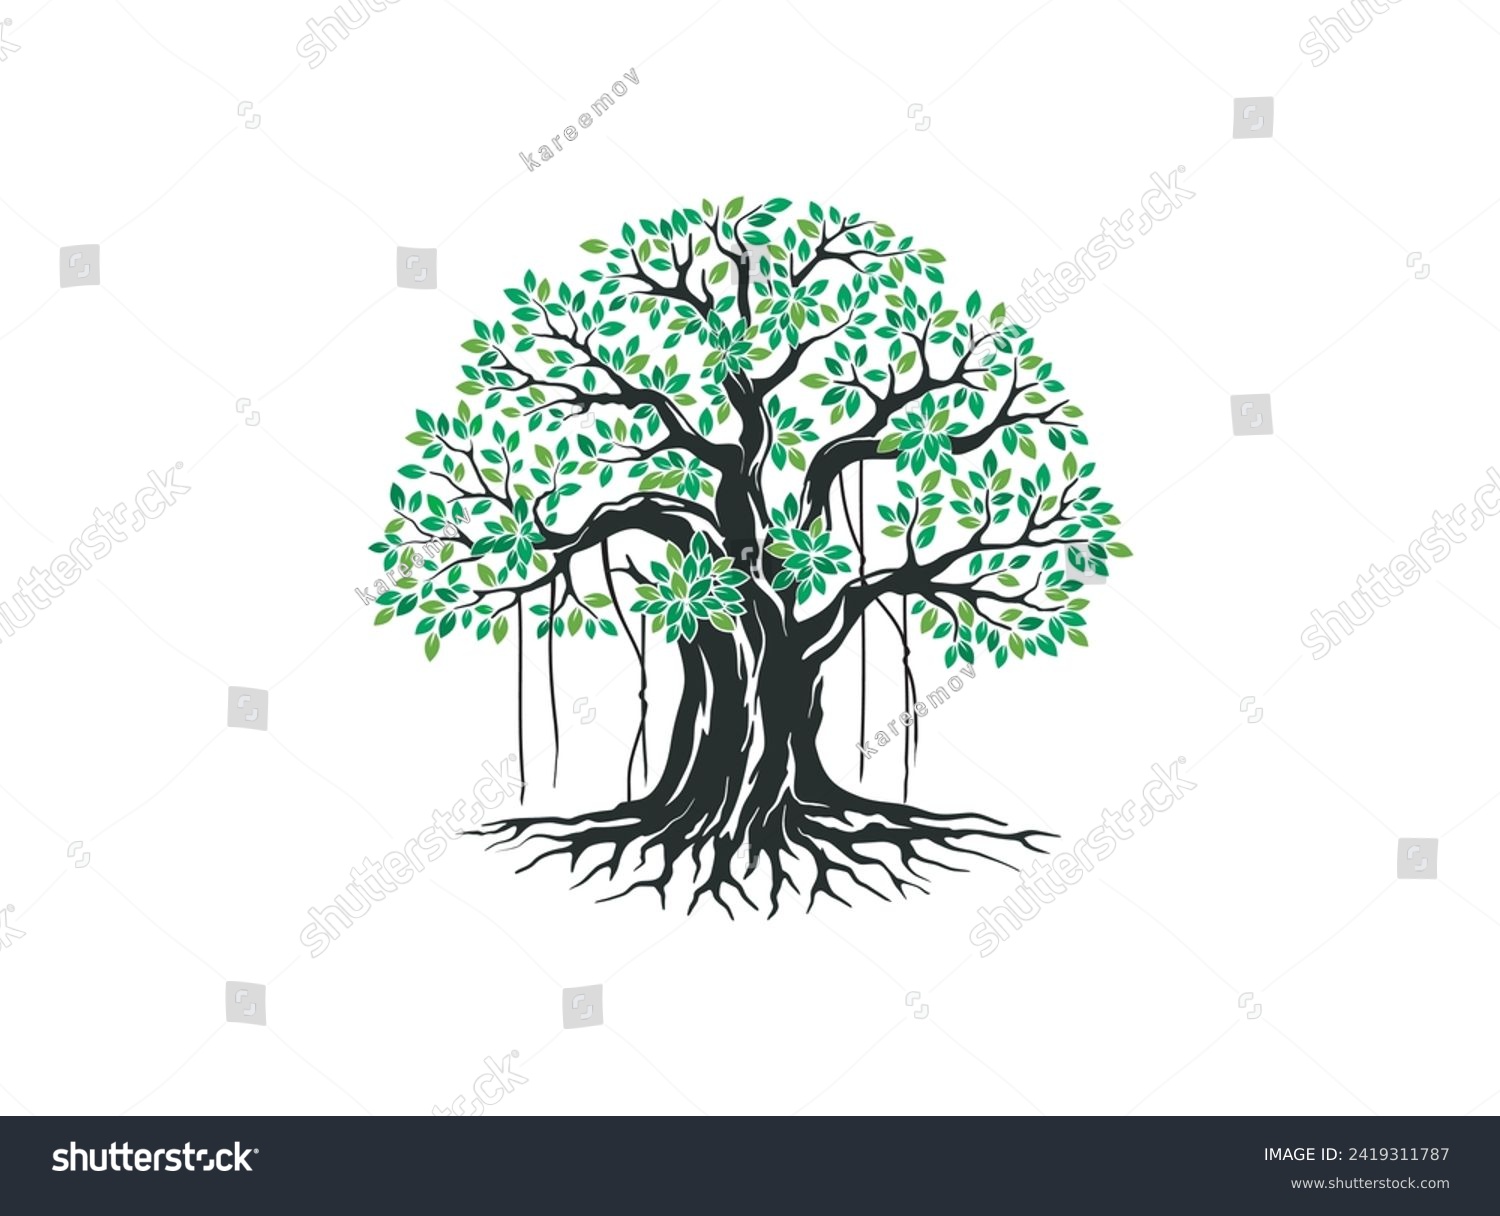 SVG of hand drawing of banyan tree vector illustrations svg